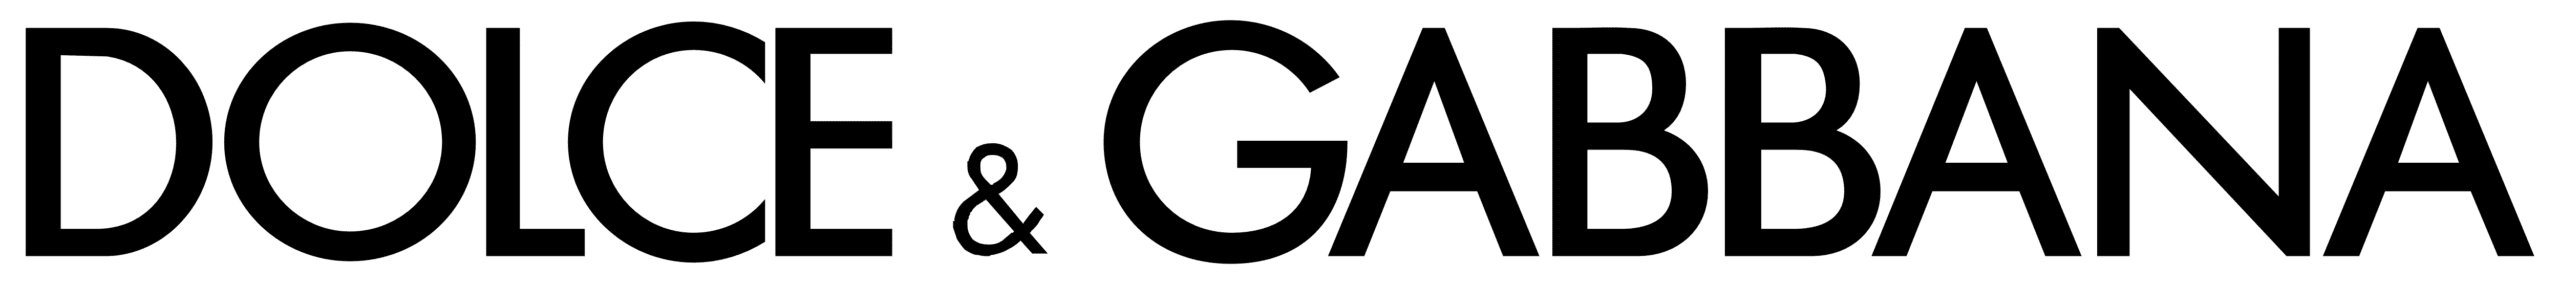 Dolce Gabbana logo PNG1